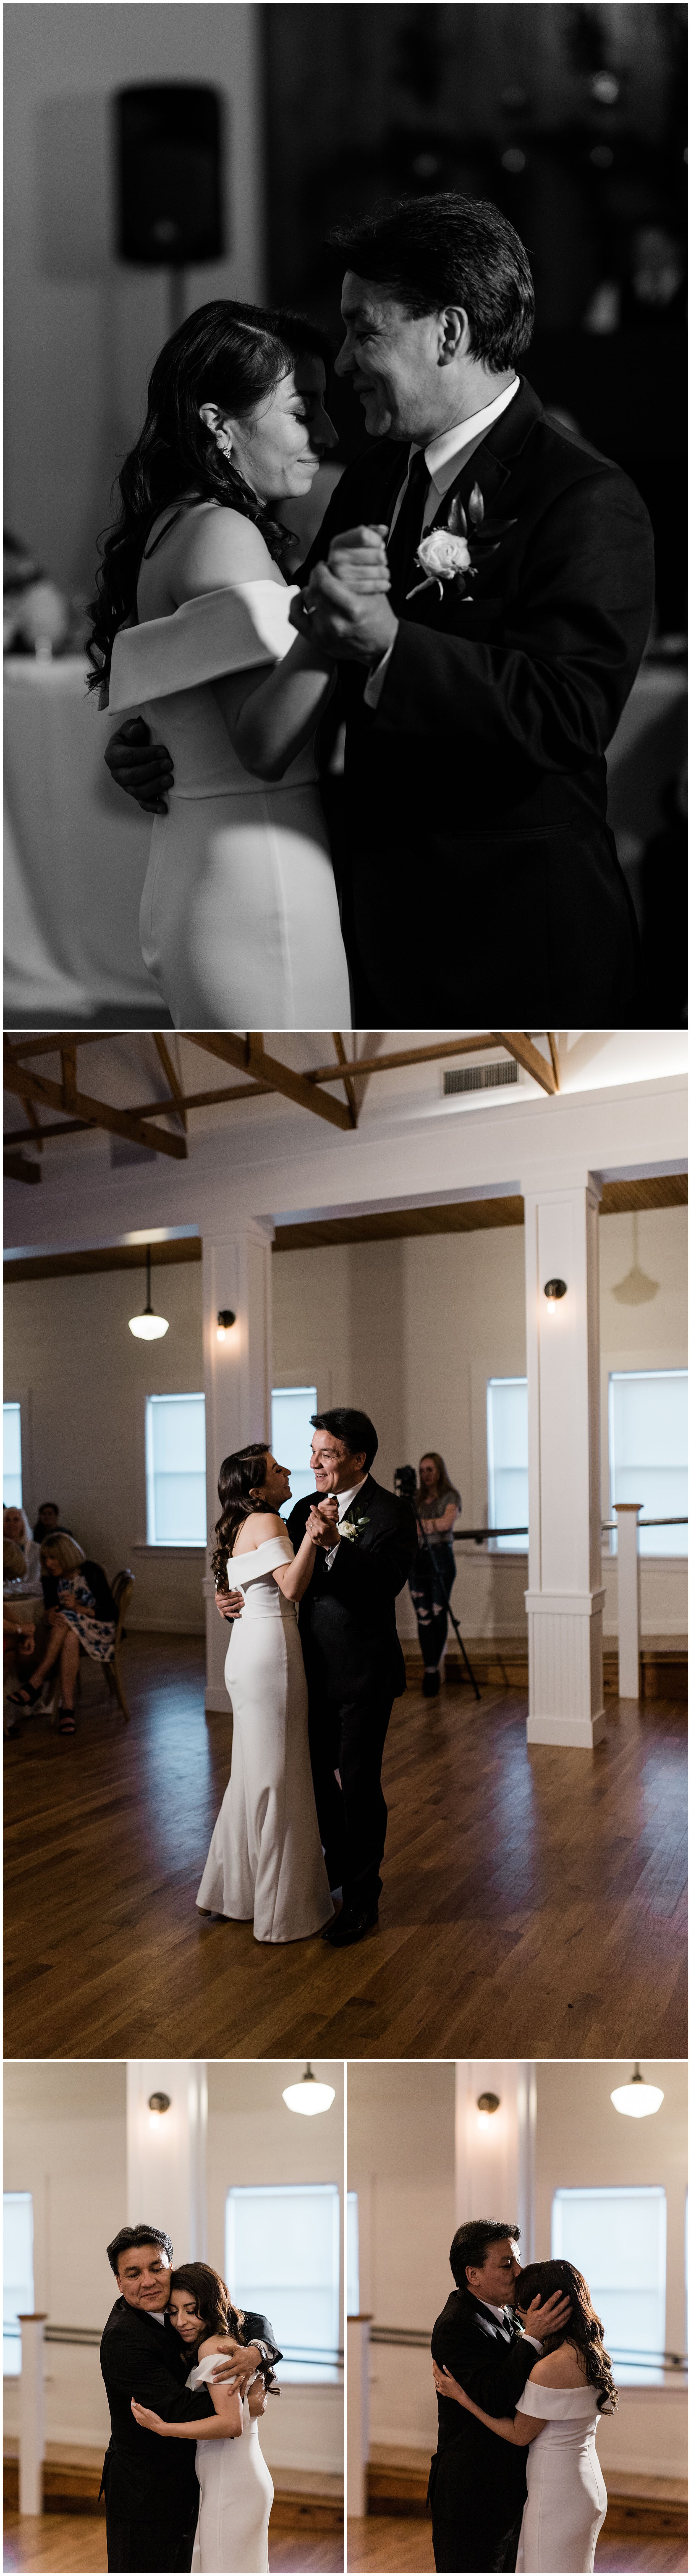  Cliff House Wedding | Dallas, TX | Dallas Wedding Photographer | www.jordanmitchellphotography.com 